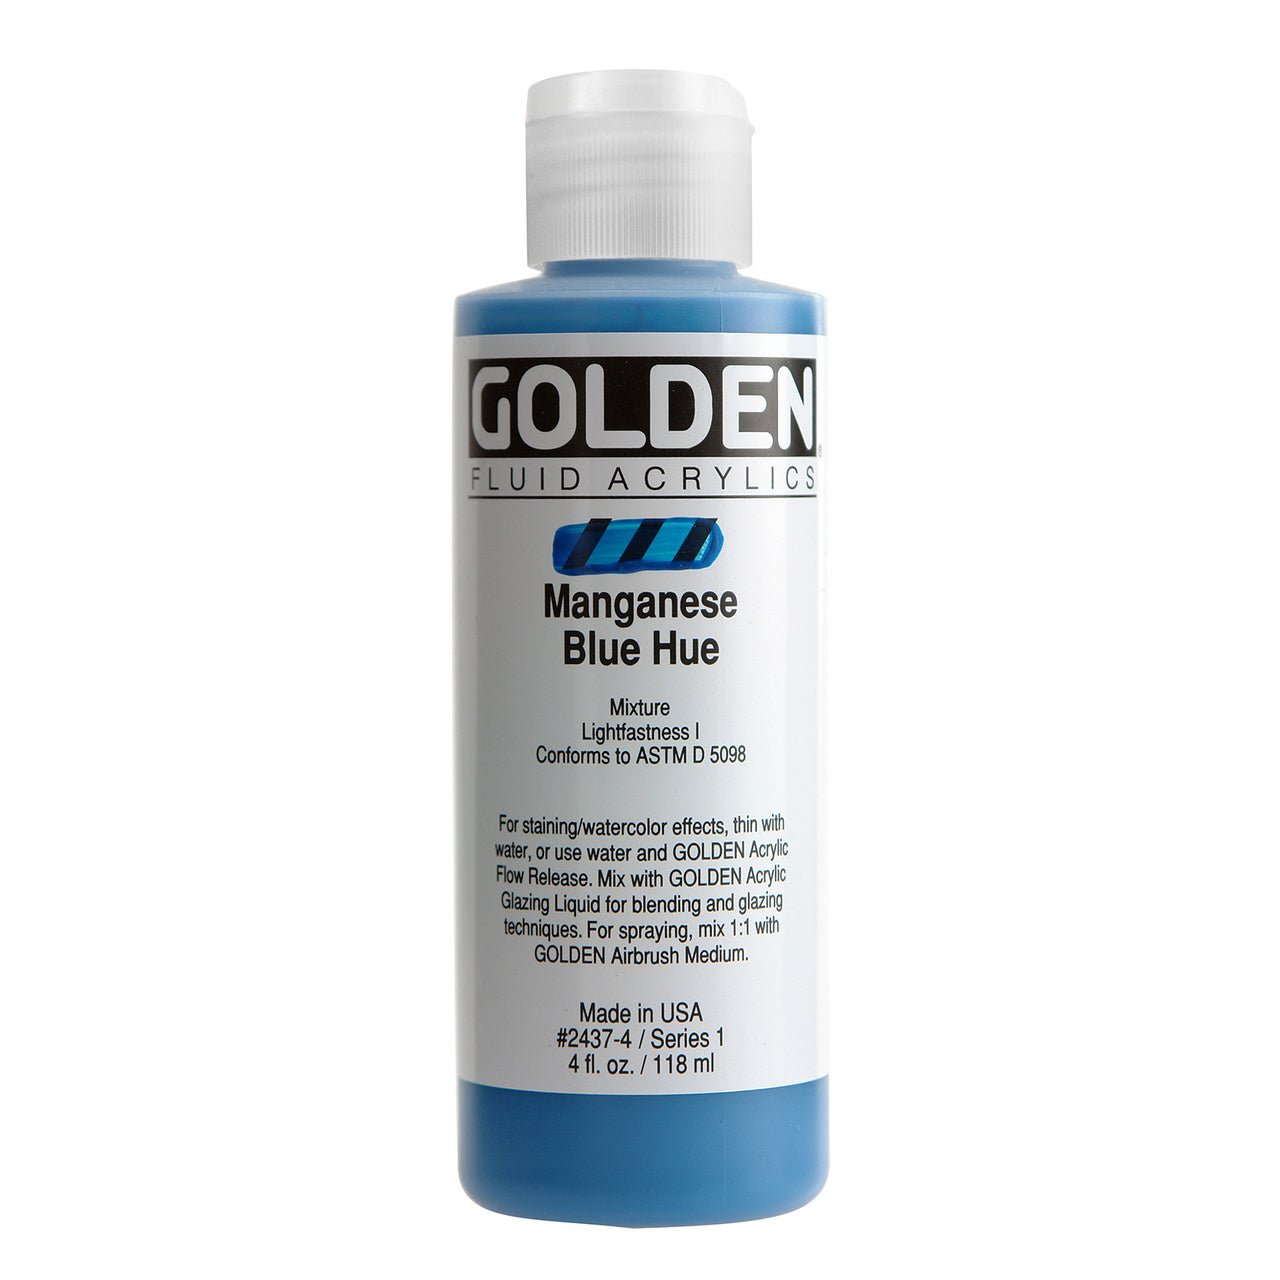 Golden Fluid Acrylic Manganese Blue Hue 4 oz - merriartist.com